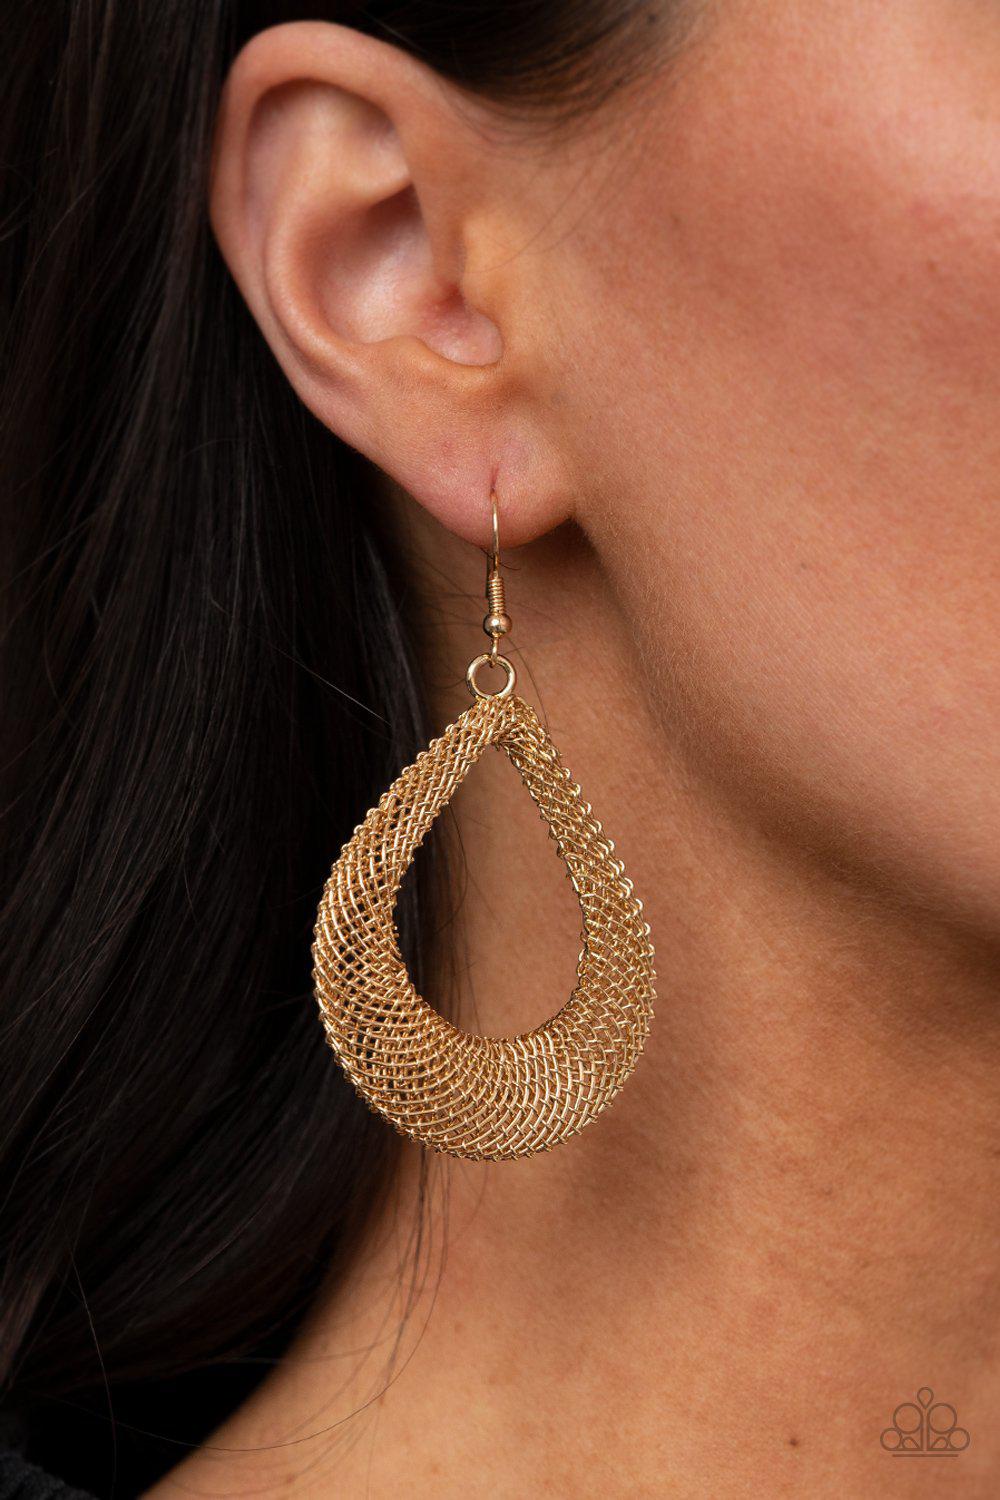 A Hot MESH Gold Teardrop Earrings - Paparazzi Accessories- model - CarasShop.com - $5 Jewelry by Cara Jewels